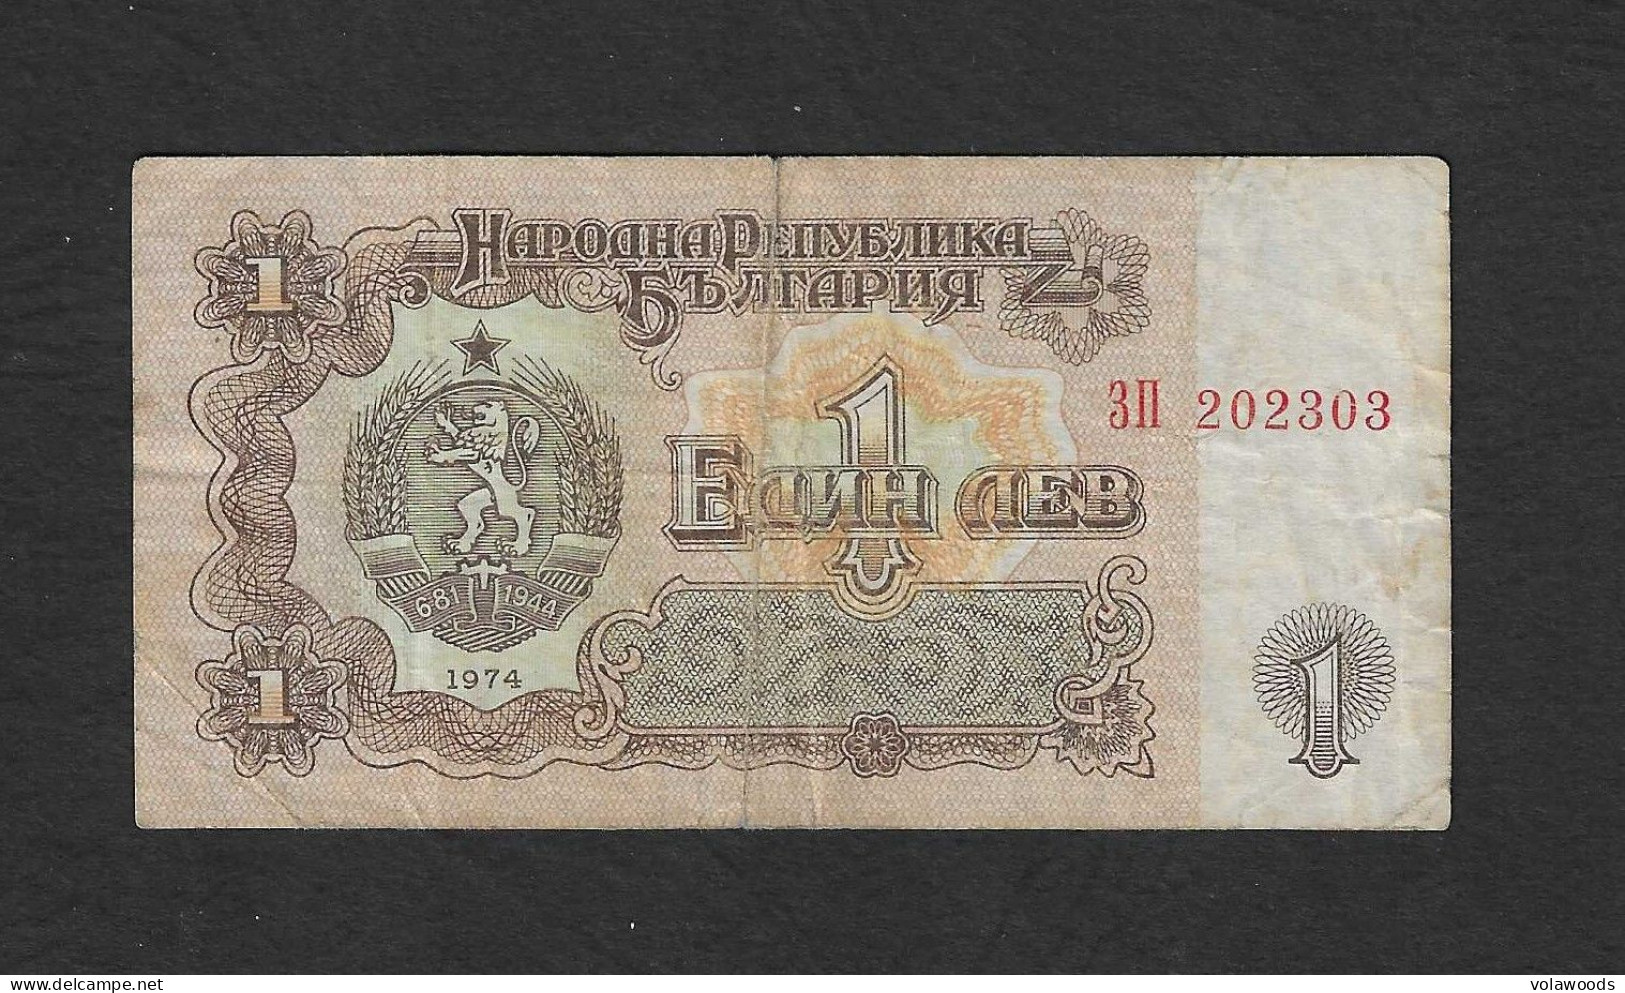 Bulgaria - Banconota Circolata Da 1 Lev P-93a - 1974 #19 - Bulgarie